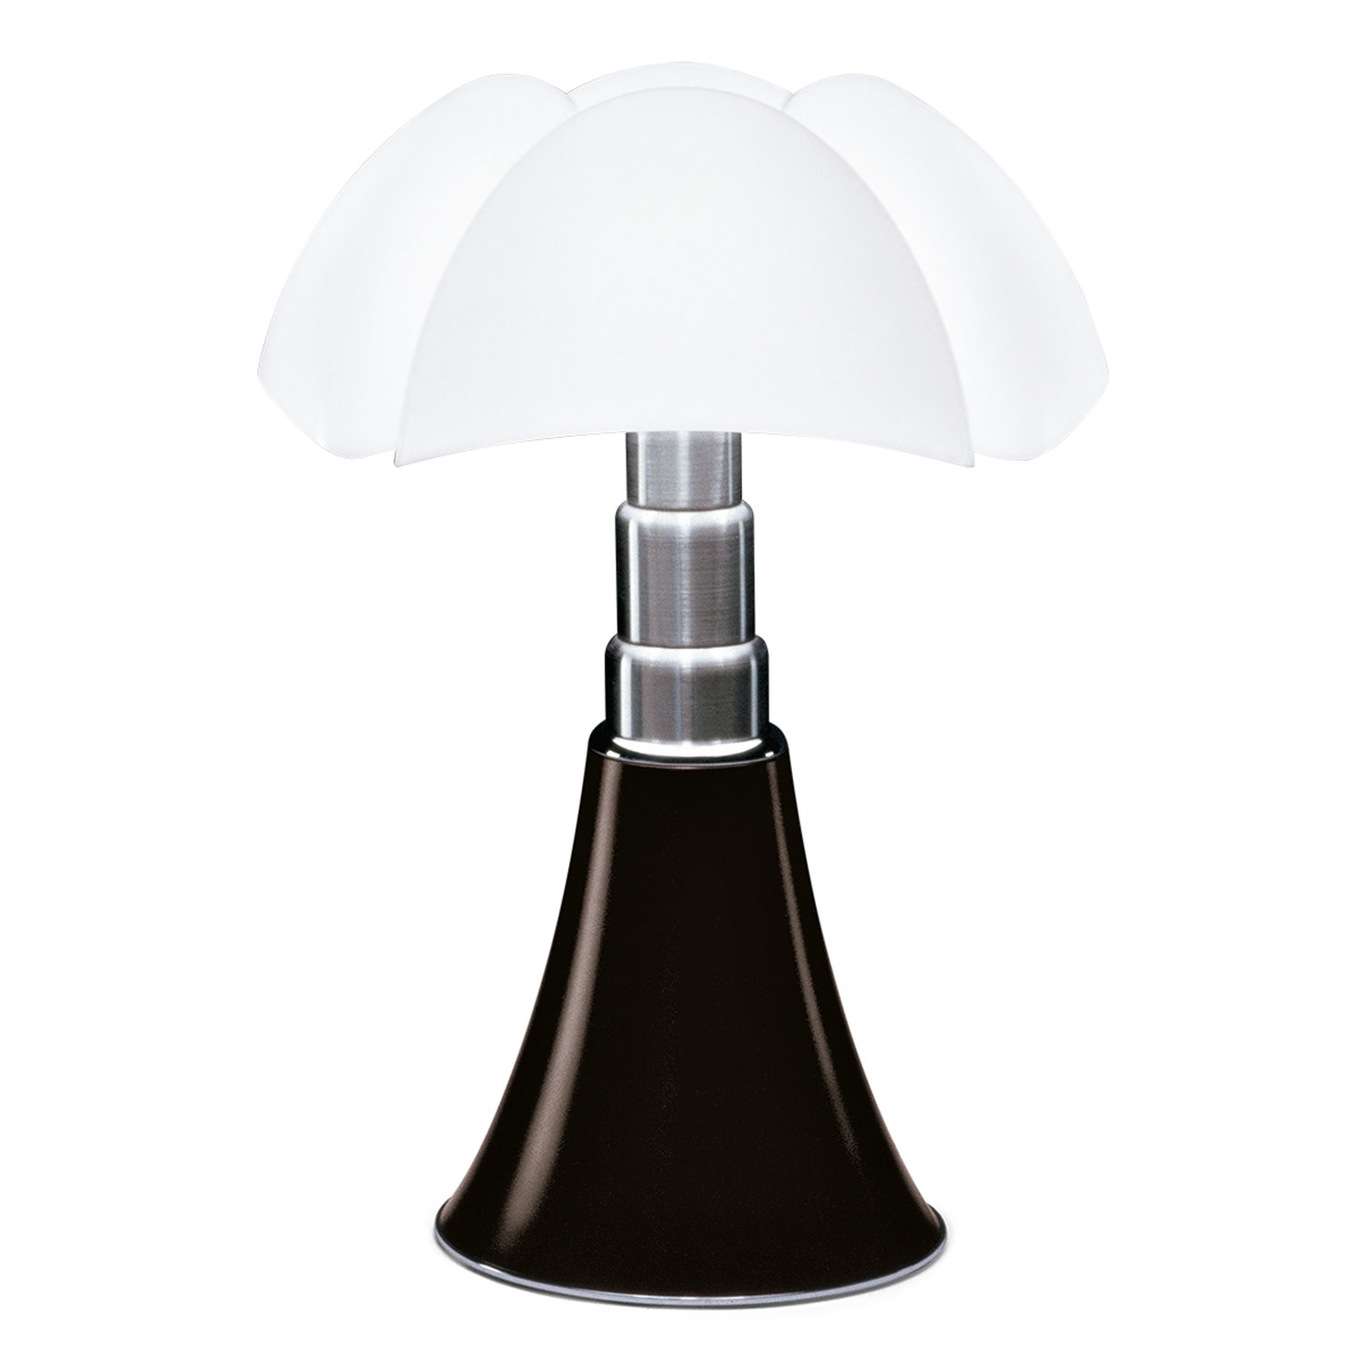 Pipistrello Medium Table Lamp, Dark Brown